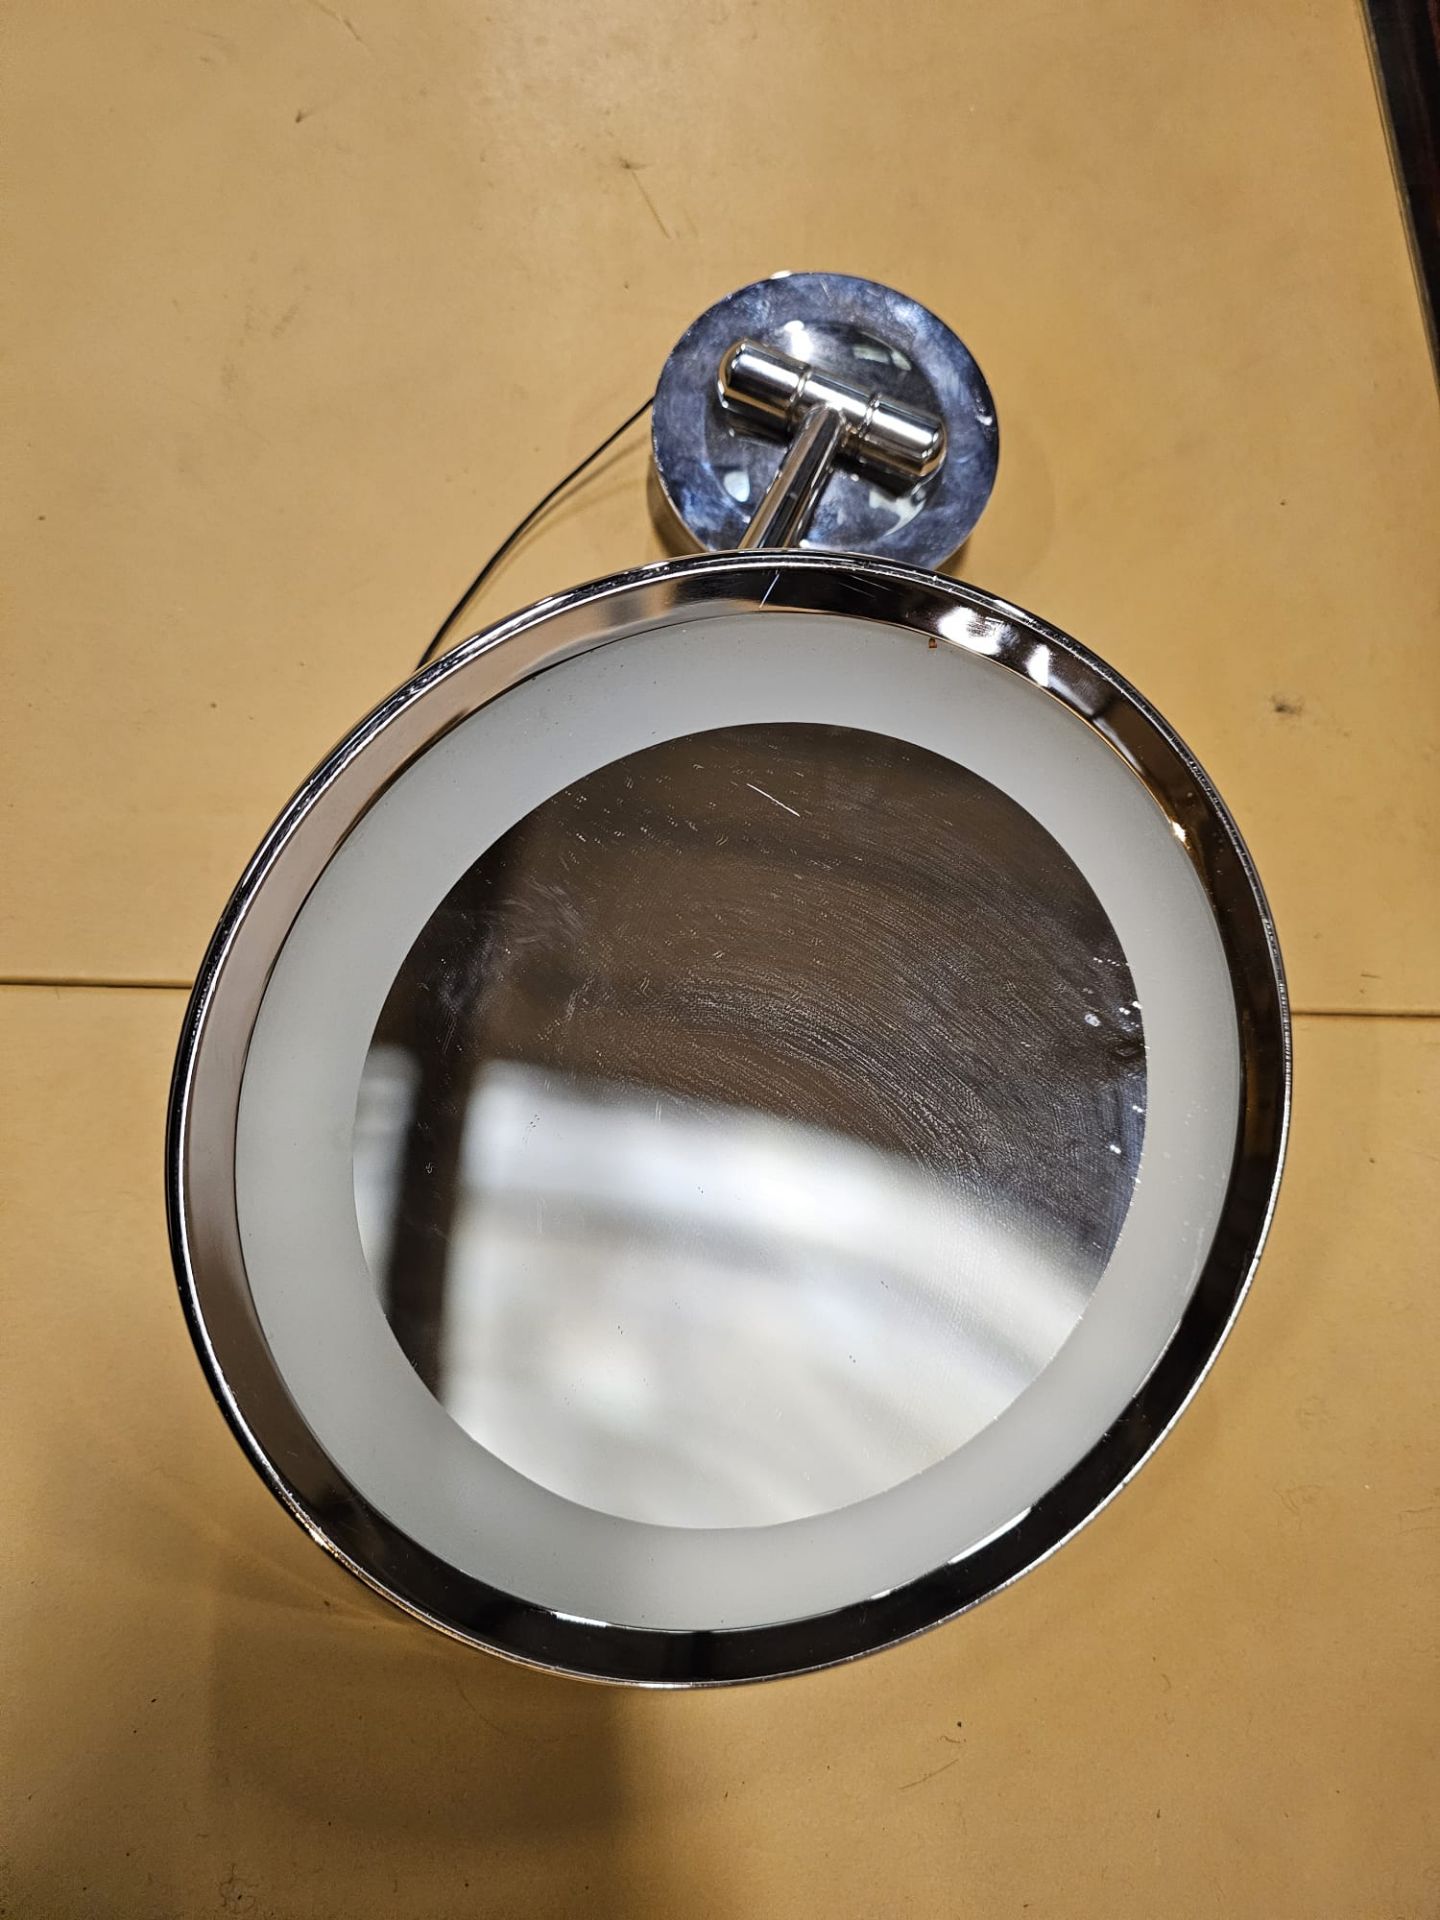 LED Illuminated Magnifying Vanity Mirror For Bathroom Round Ingress Protection Rating IP51 - Image 2 of 3